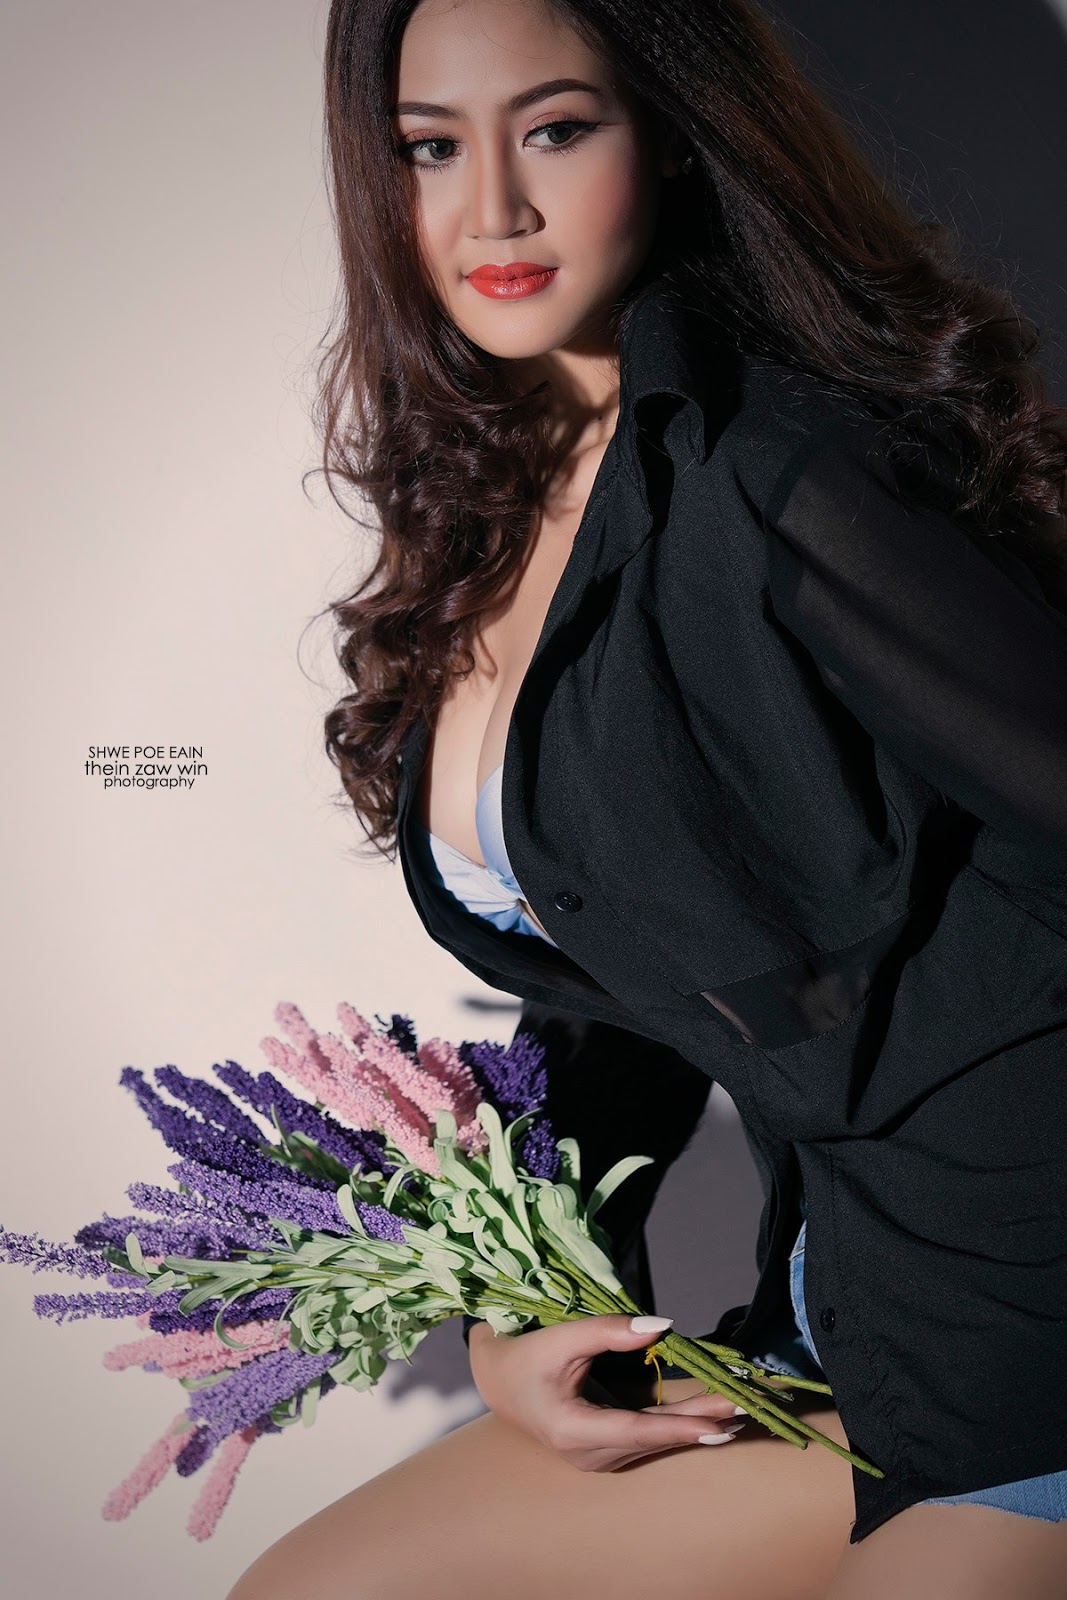 Shwe Poe Eain - Beauty Style Studio Fashion Photoshoot In Black Outfit 